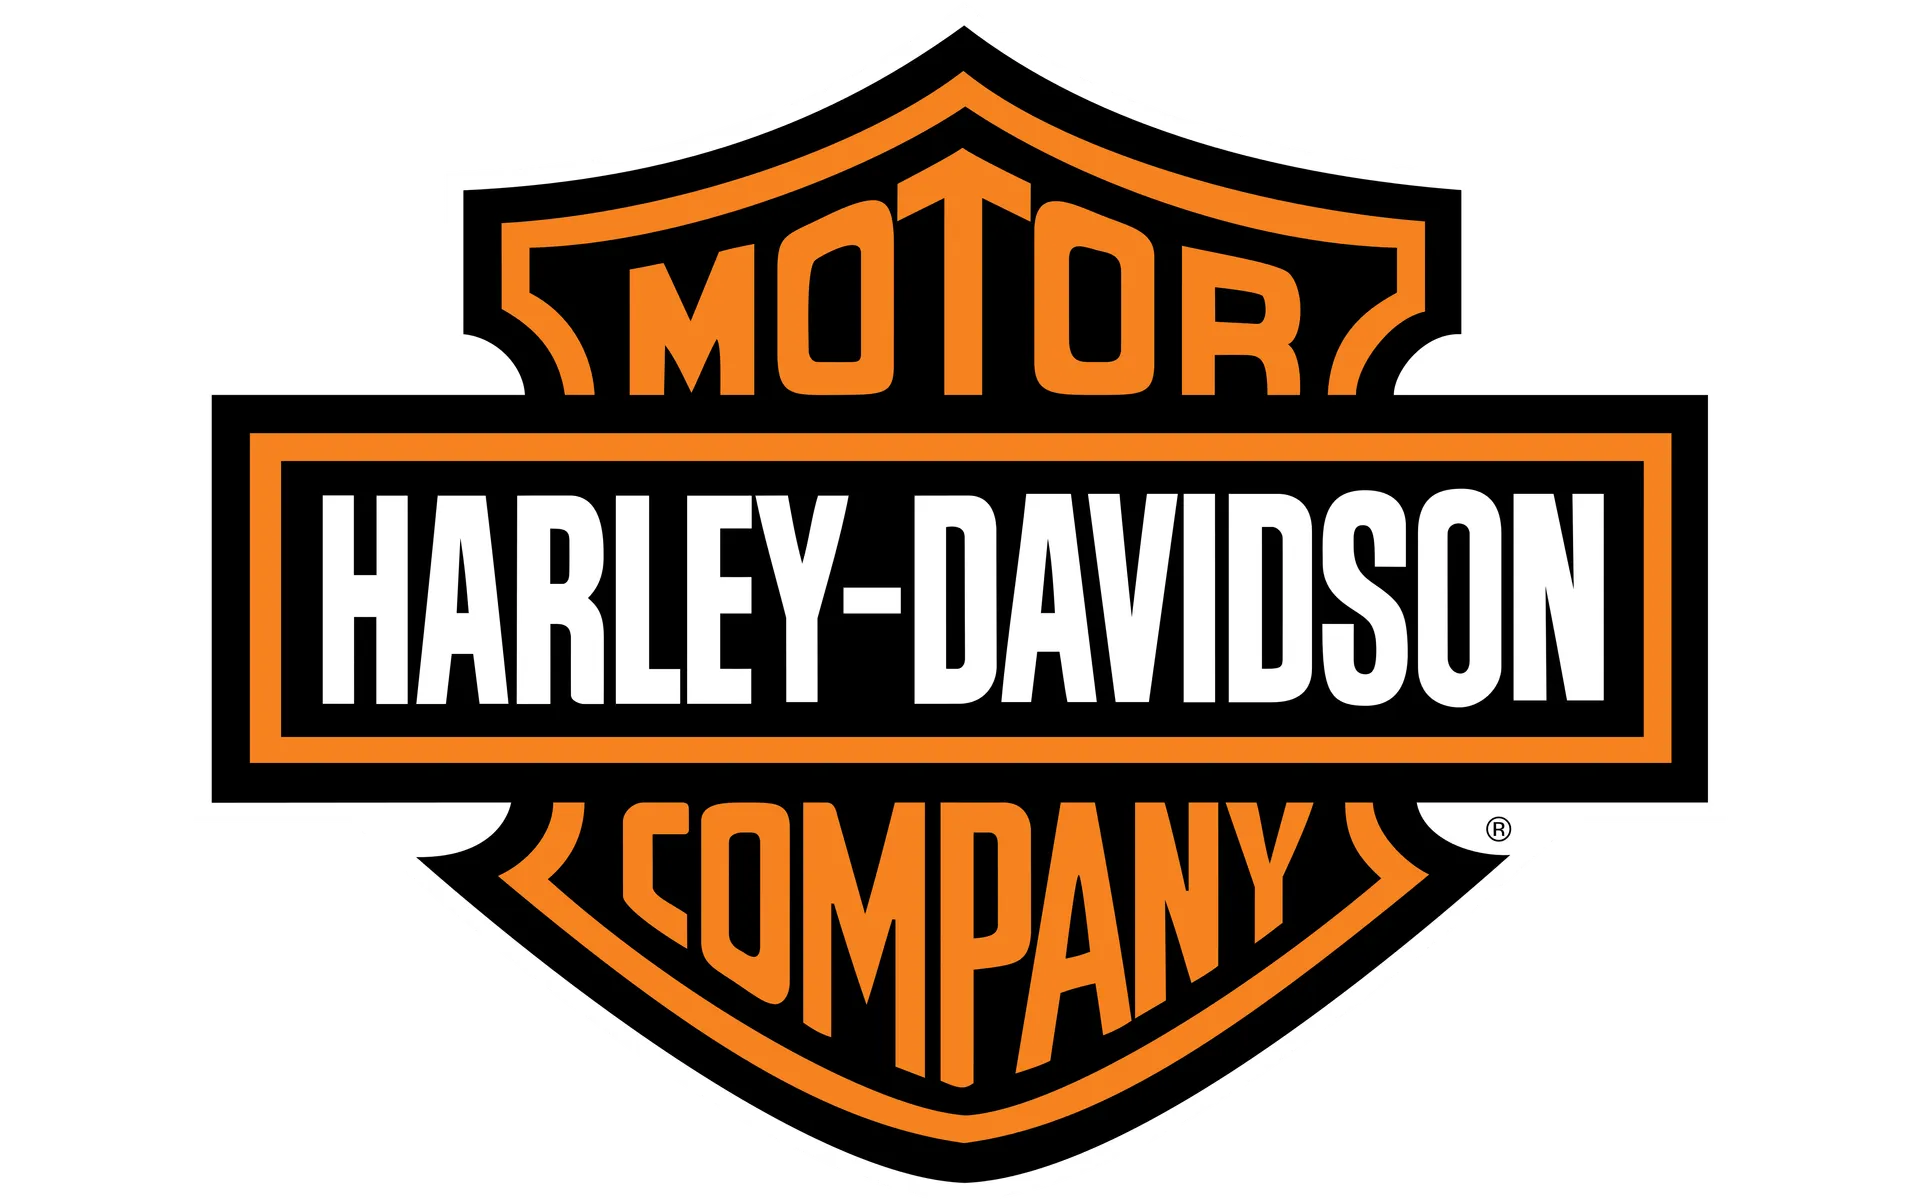 HARLEY DAVIDSON logo de circulaire